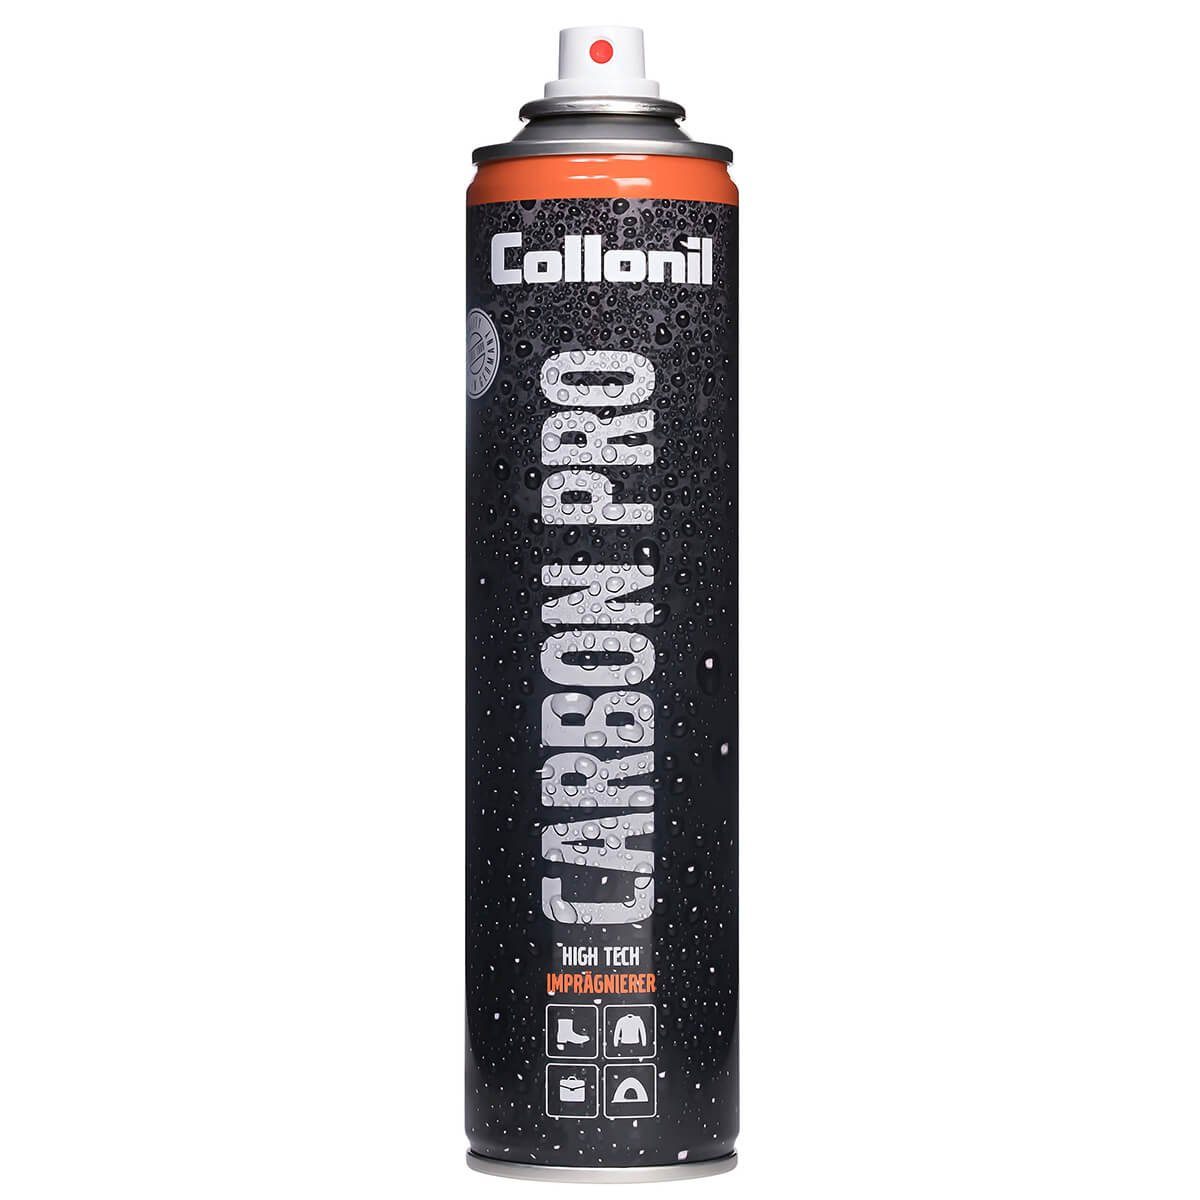 Collonil Collonil Pro ml Carbon - Schuh-Imprägnierspray alle für Materialien Hightech-Schutz 300